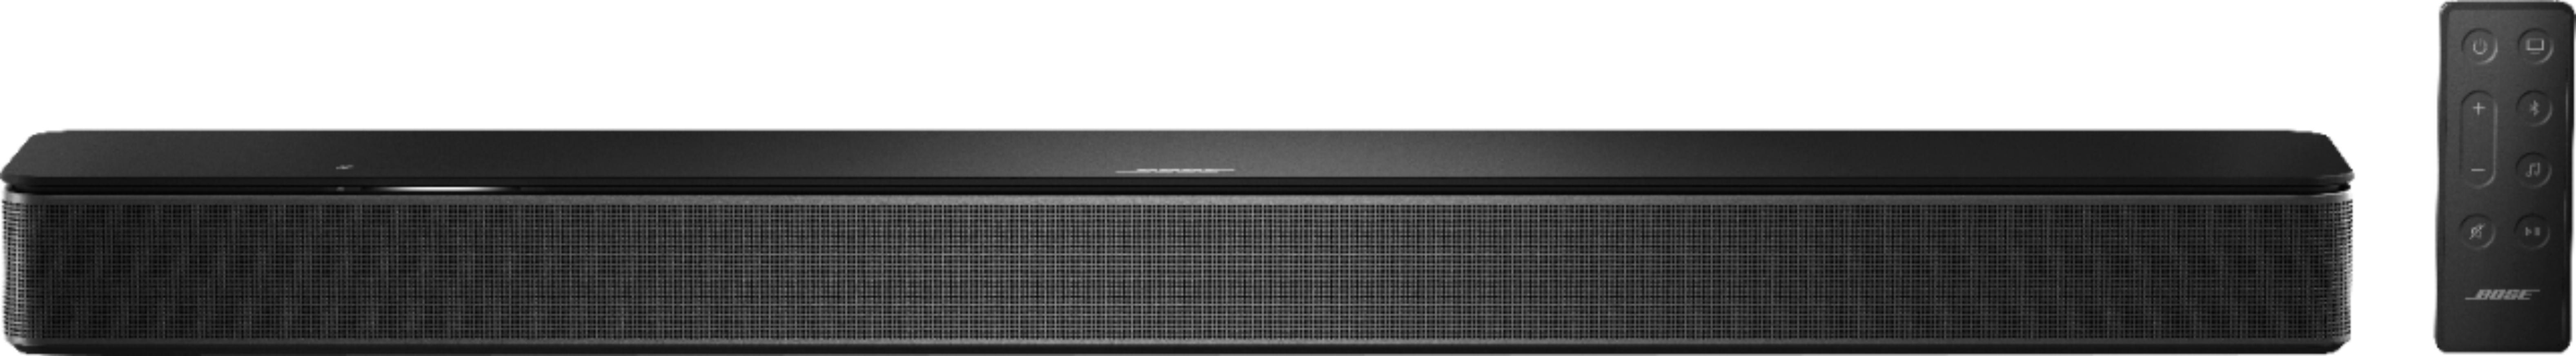 Bose Smart Soundbar 300 with Voice Assistant Black 843299-1100 - Best Buy | Best Buy U.S.